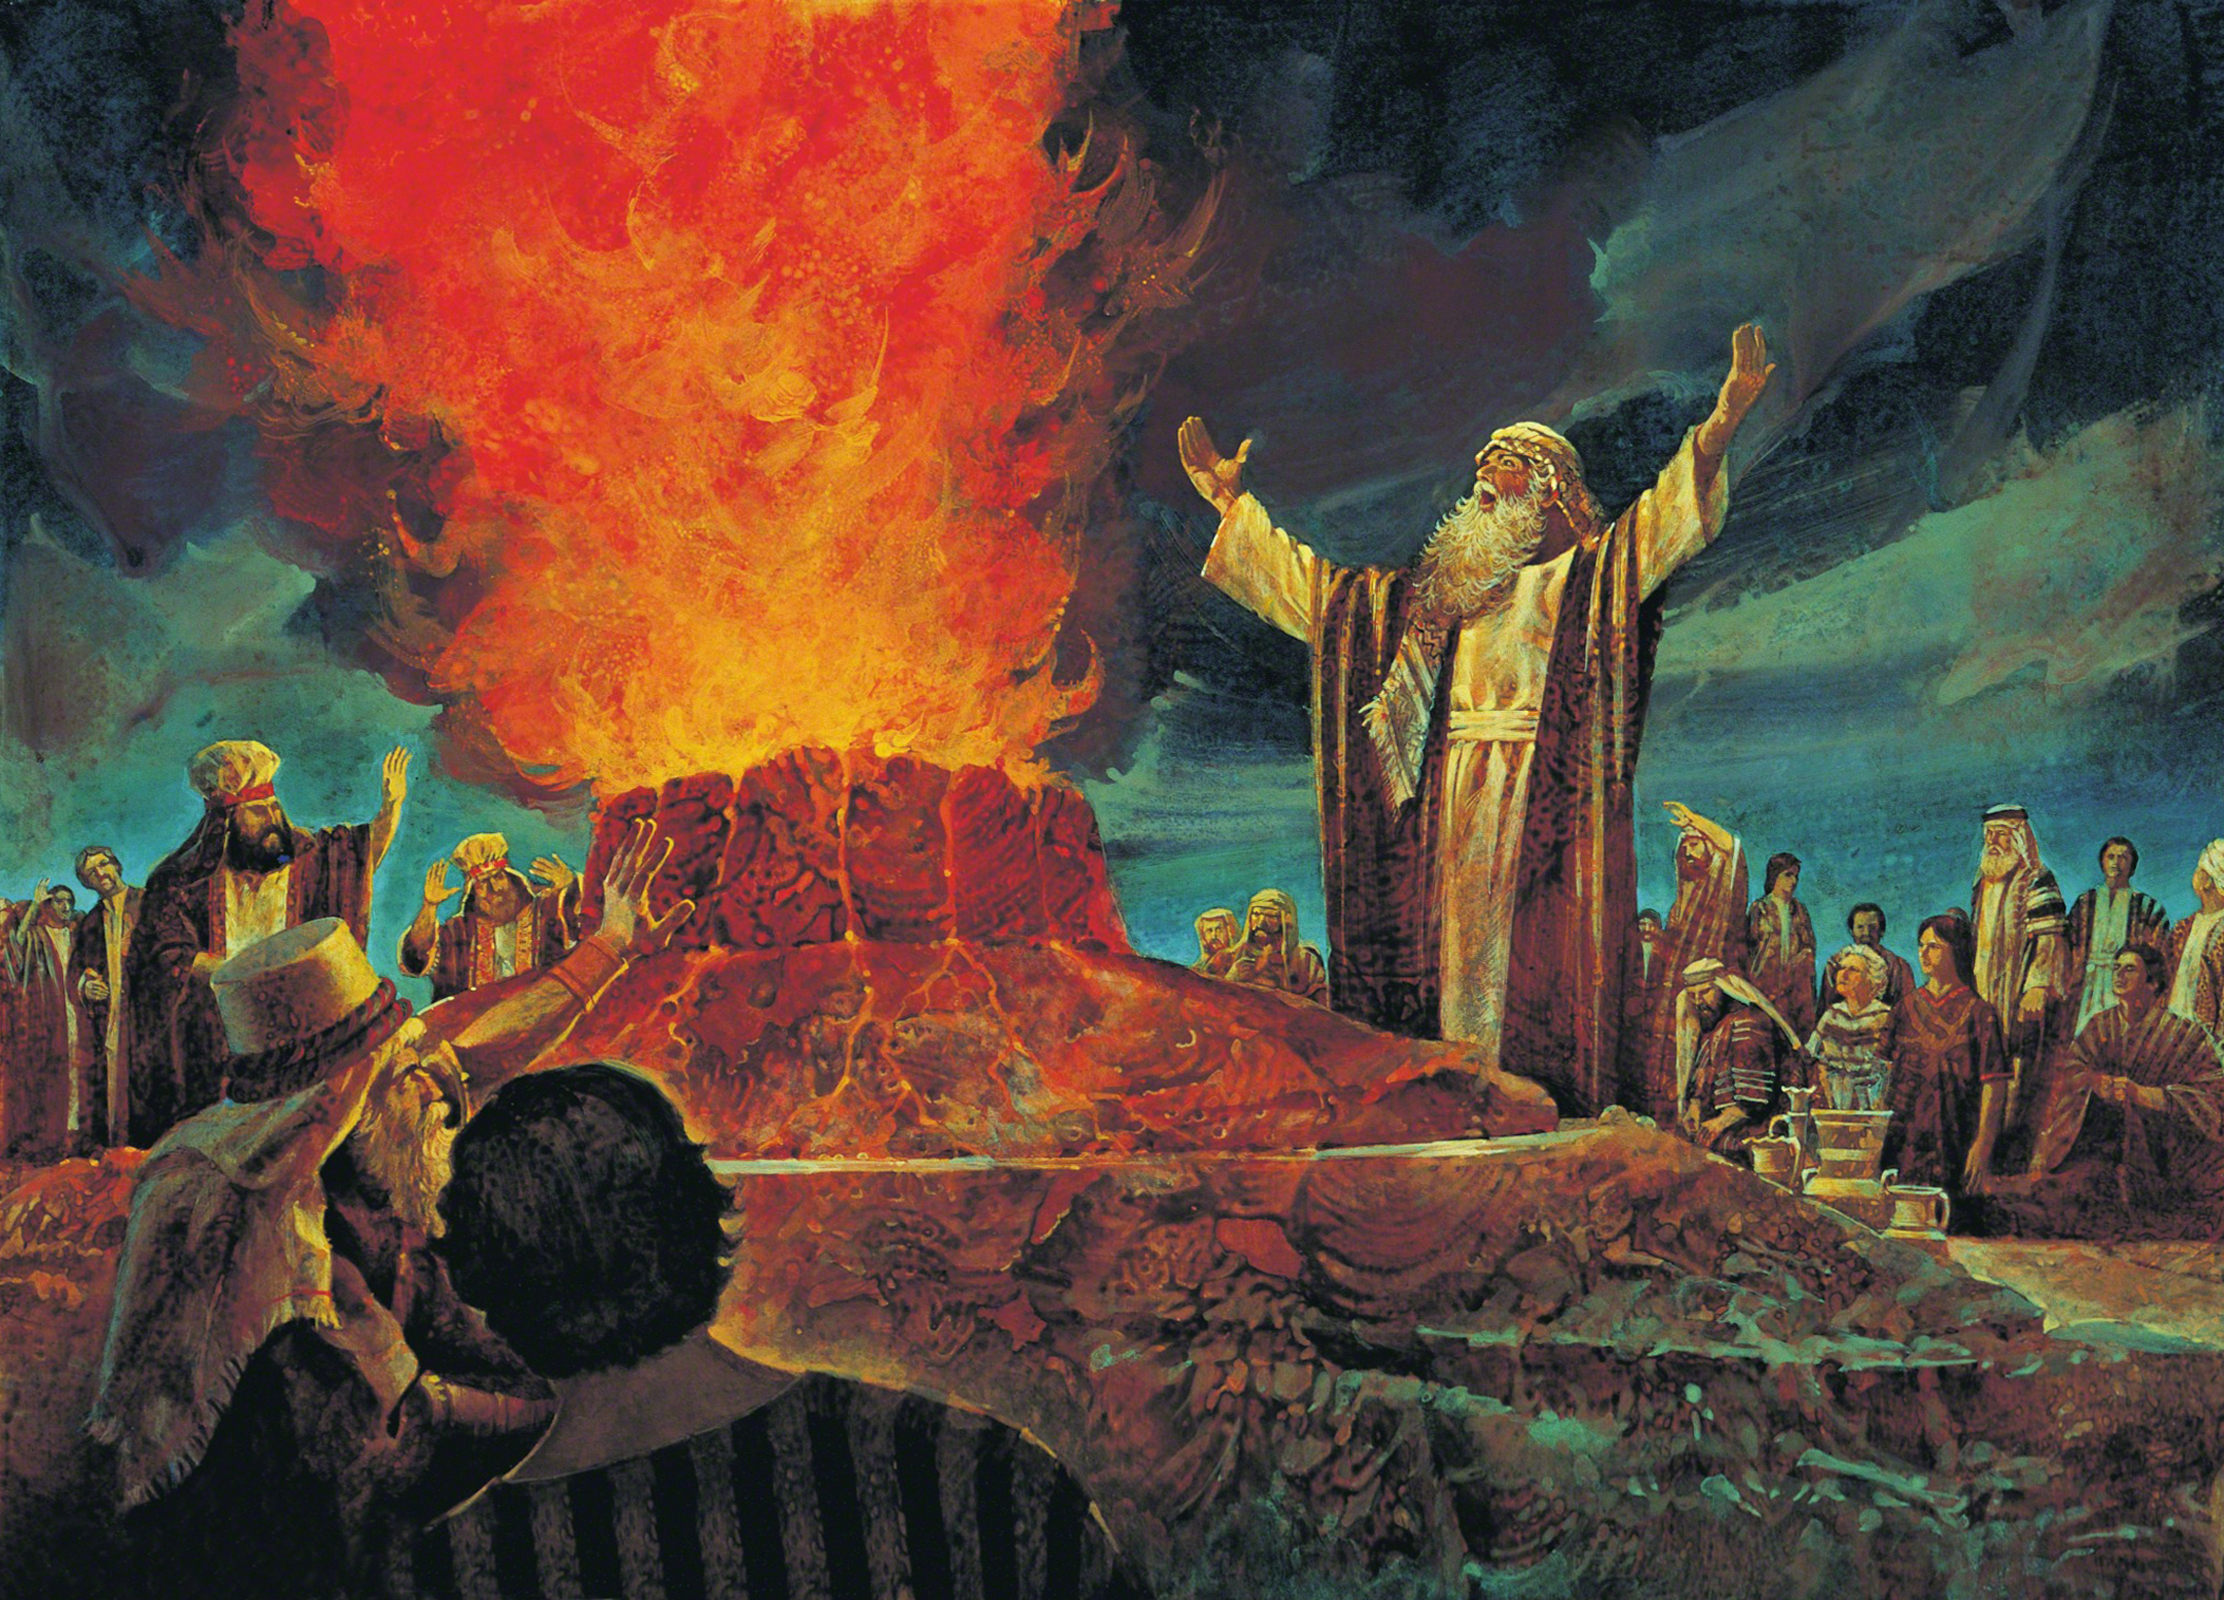 Elijah Contends Against The Priests Of Baal